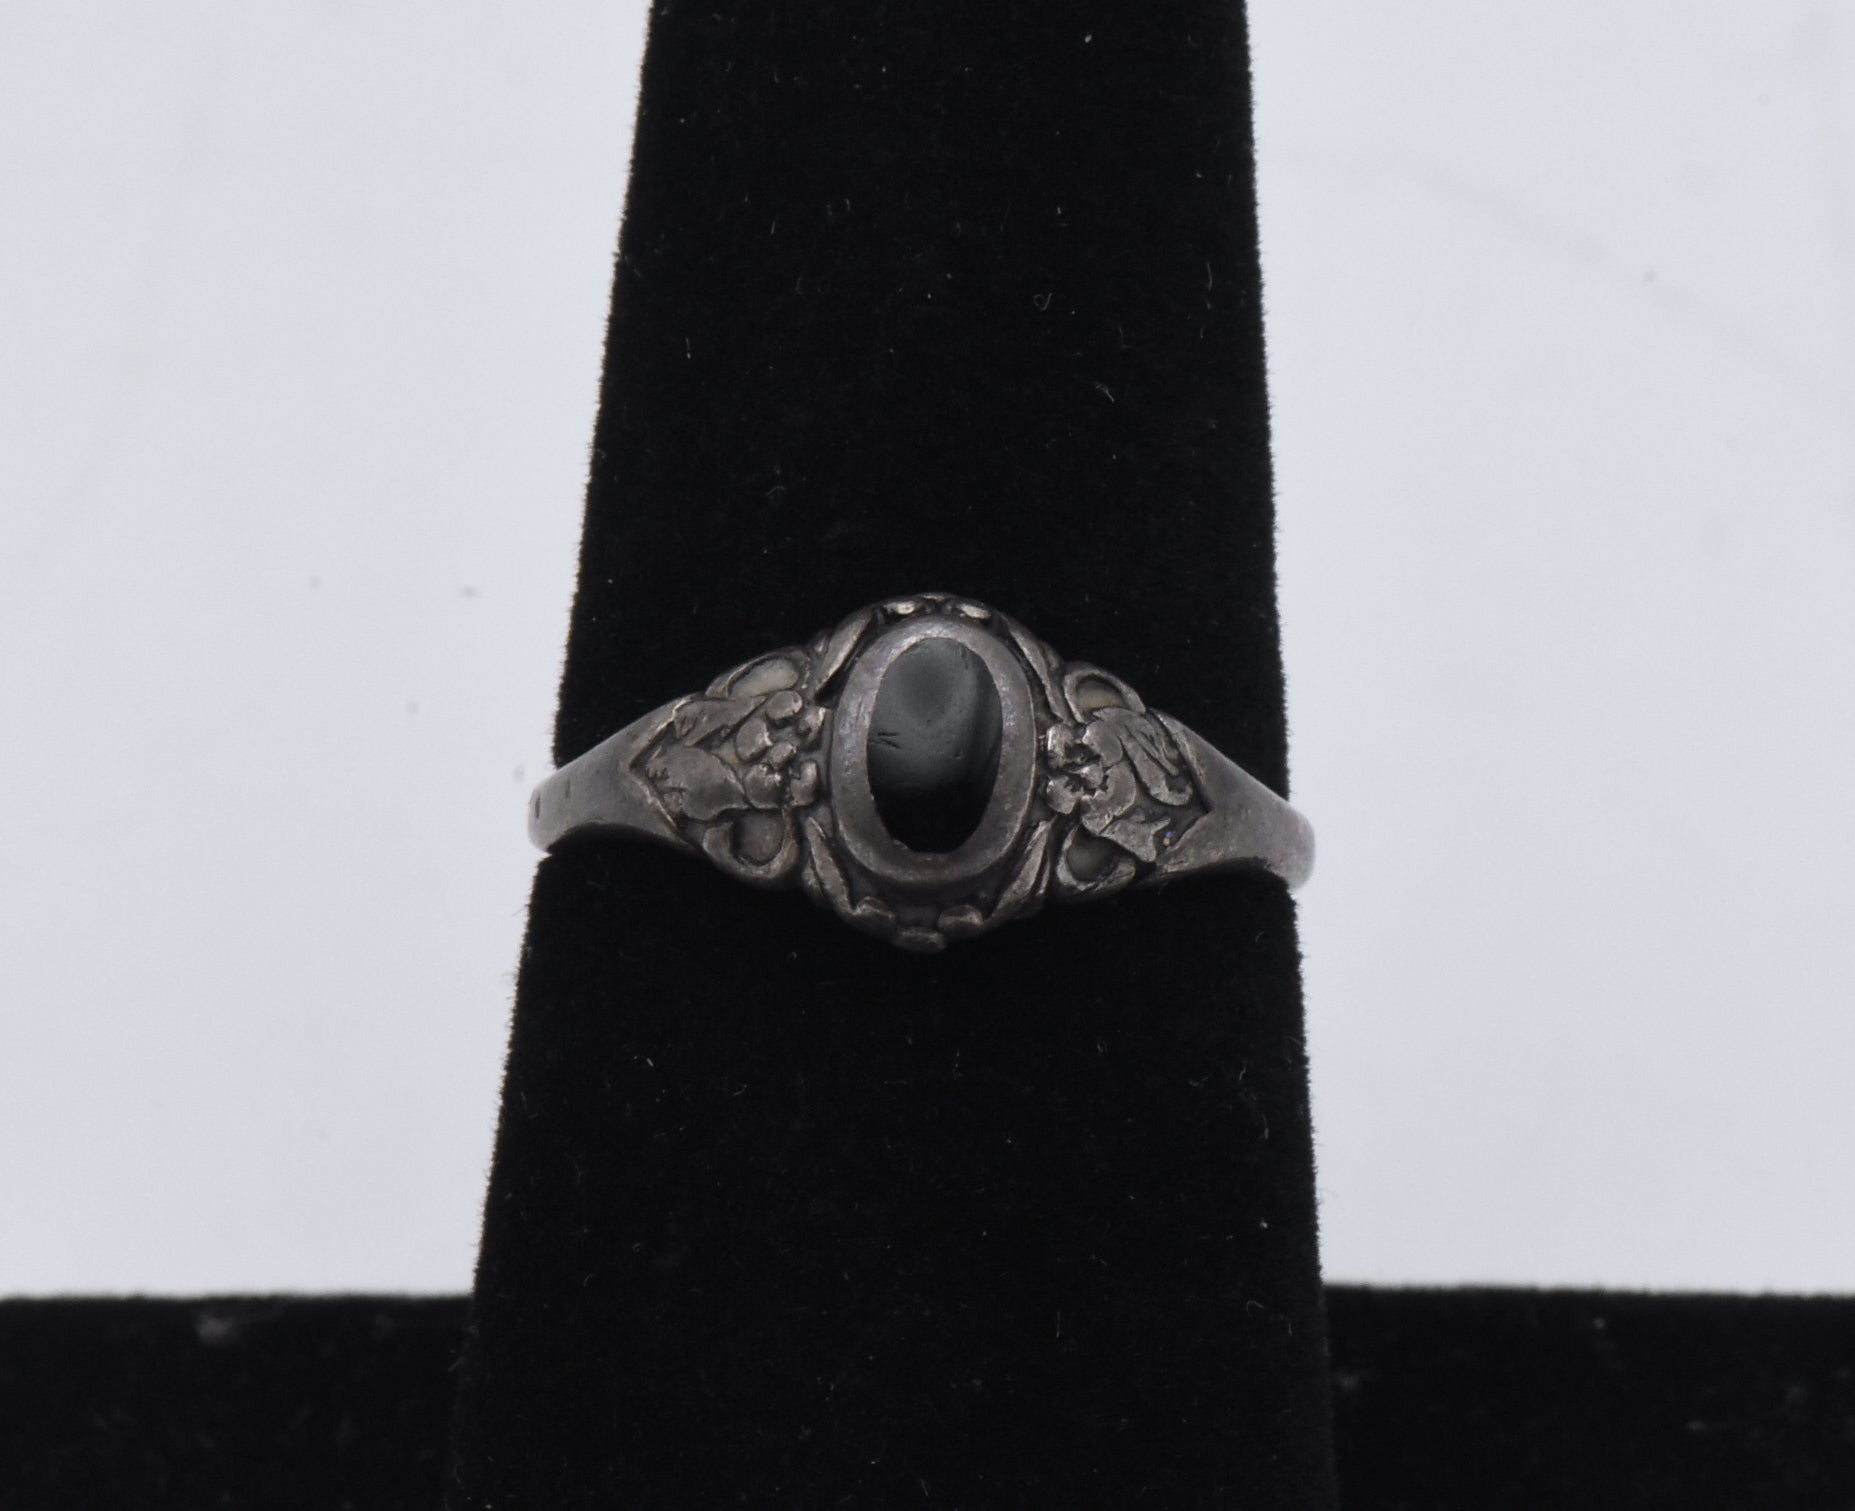 Vintage Sterling Silver Art Nouveau Black Onyx Ring - Size 7